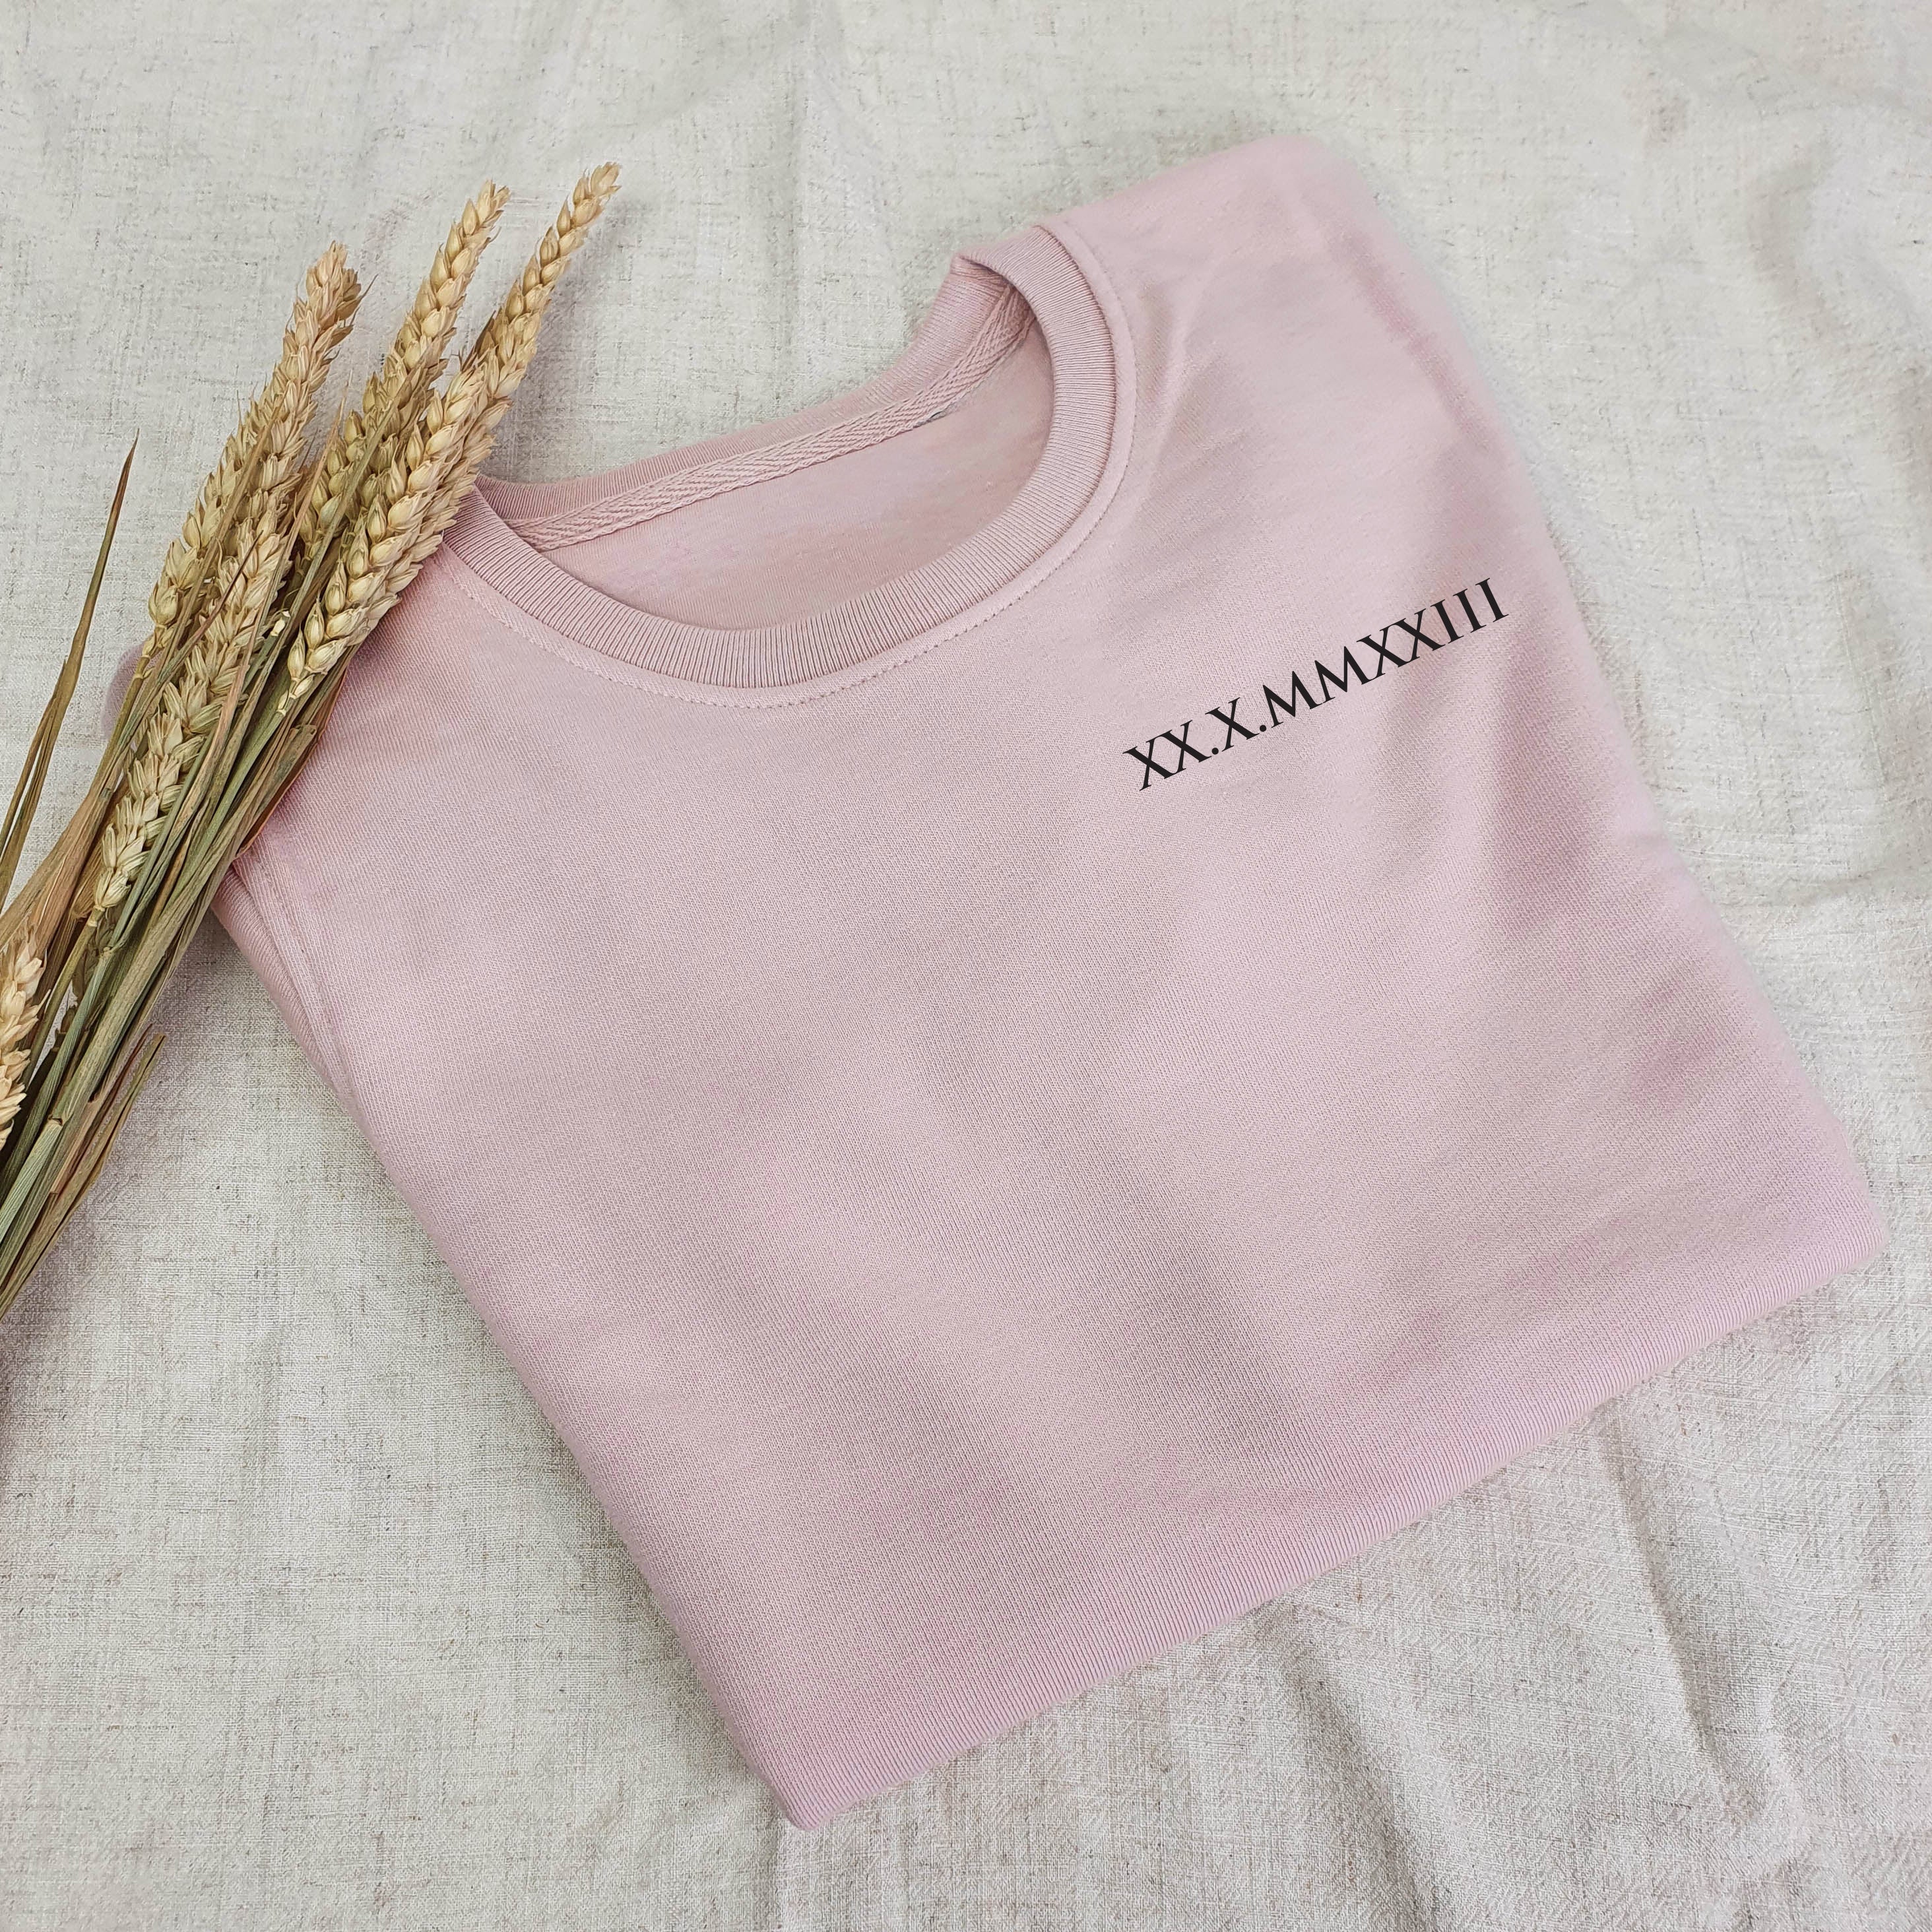 Trui met datum in Romeinse cijfers - Soft Pink sweater